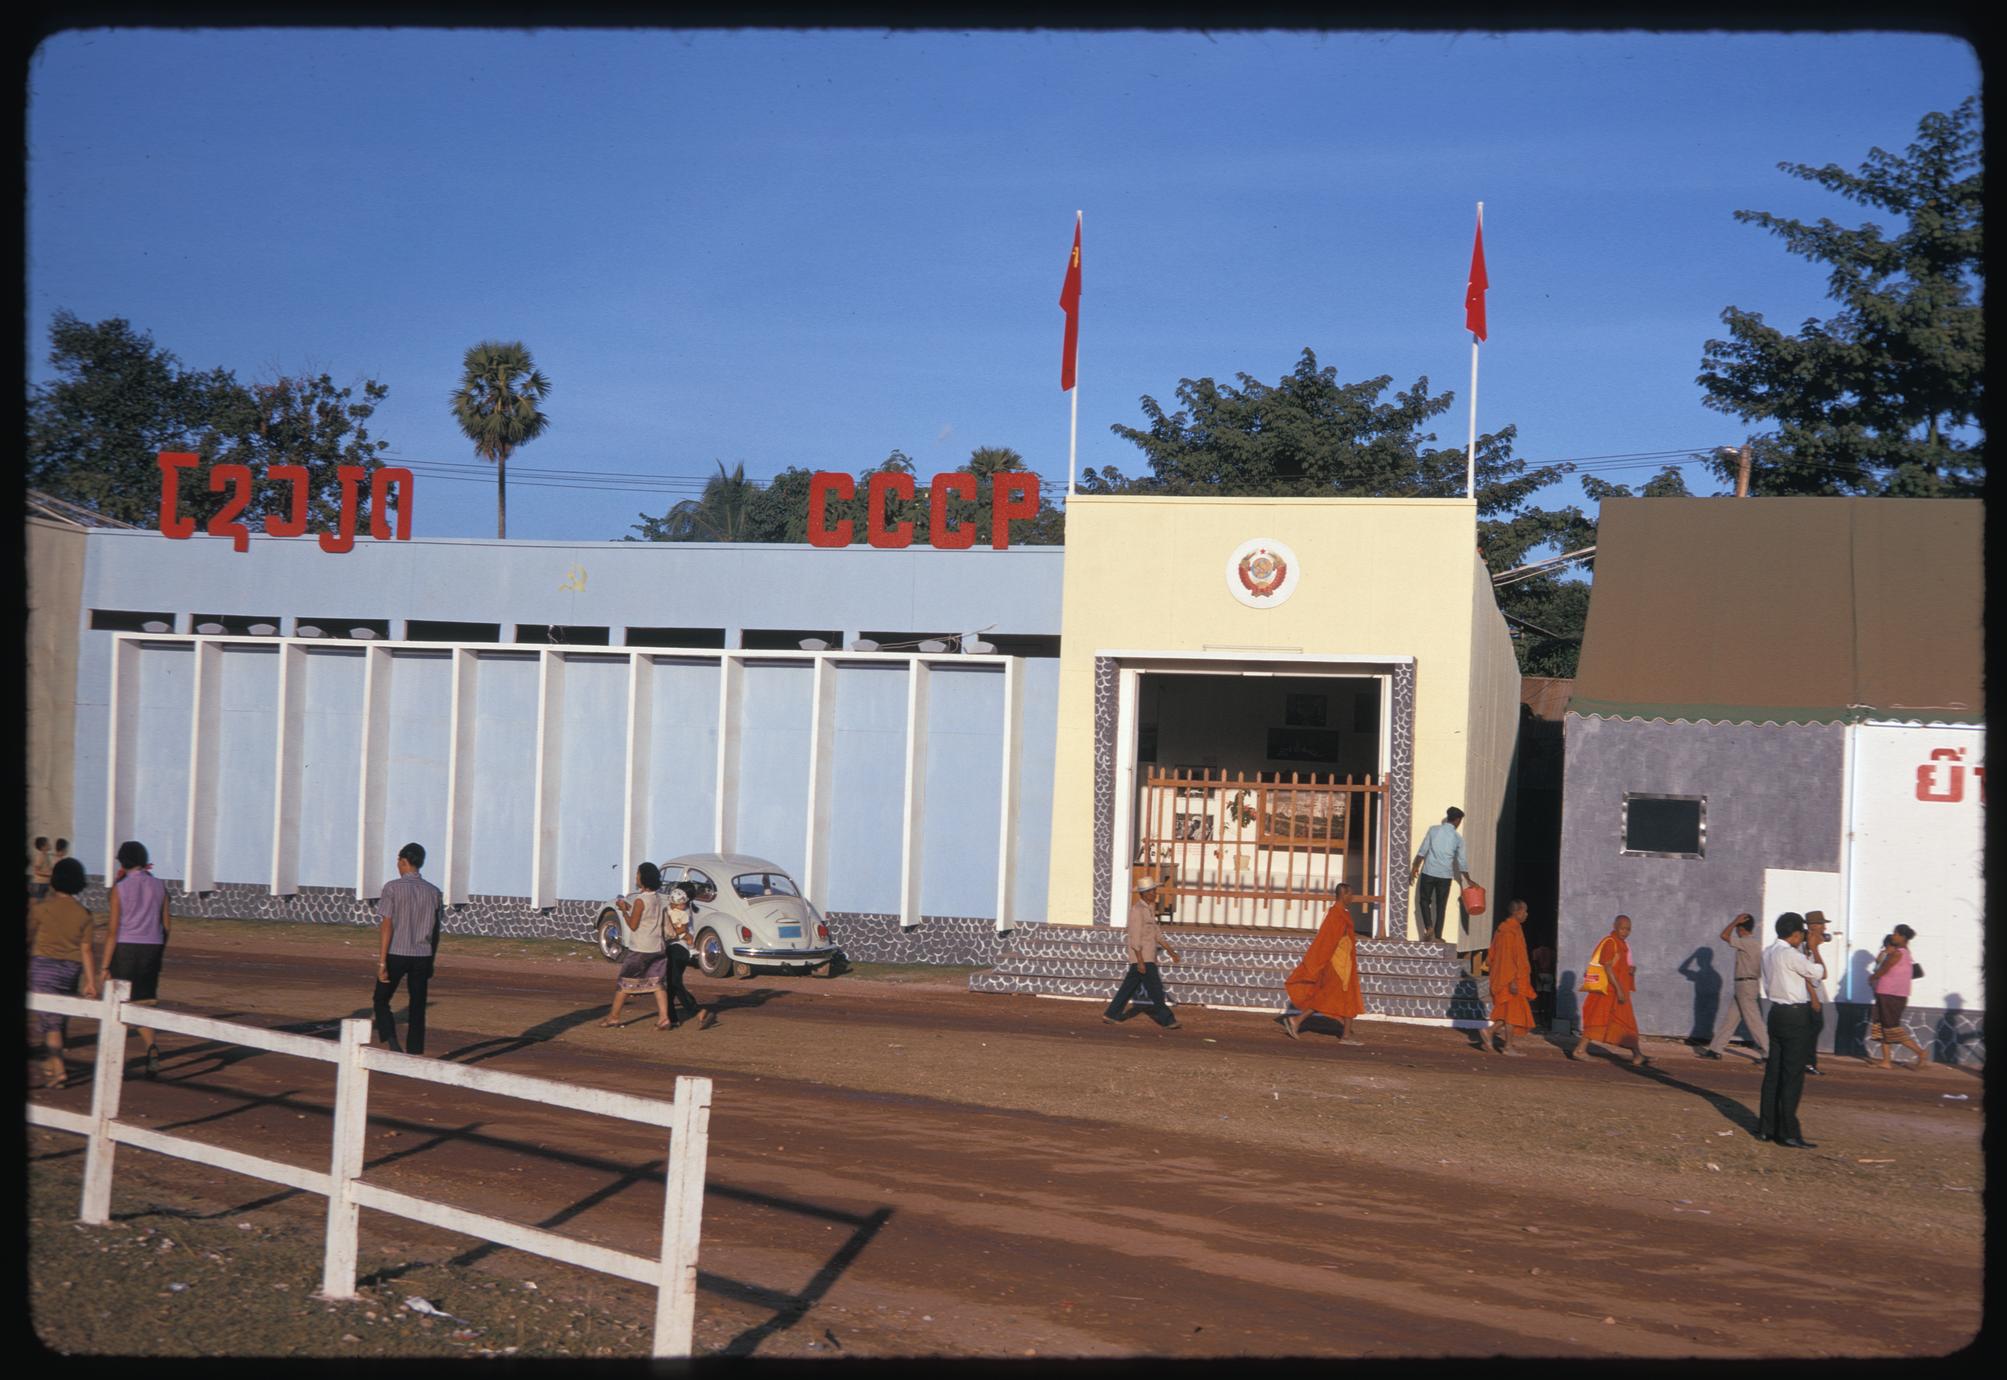 That Luang fair : USSR exhibit--outside view